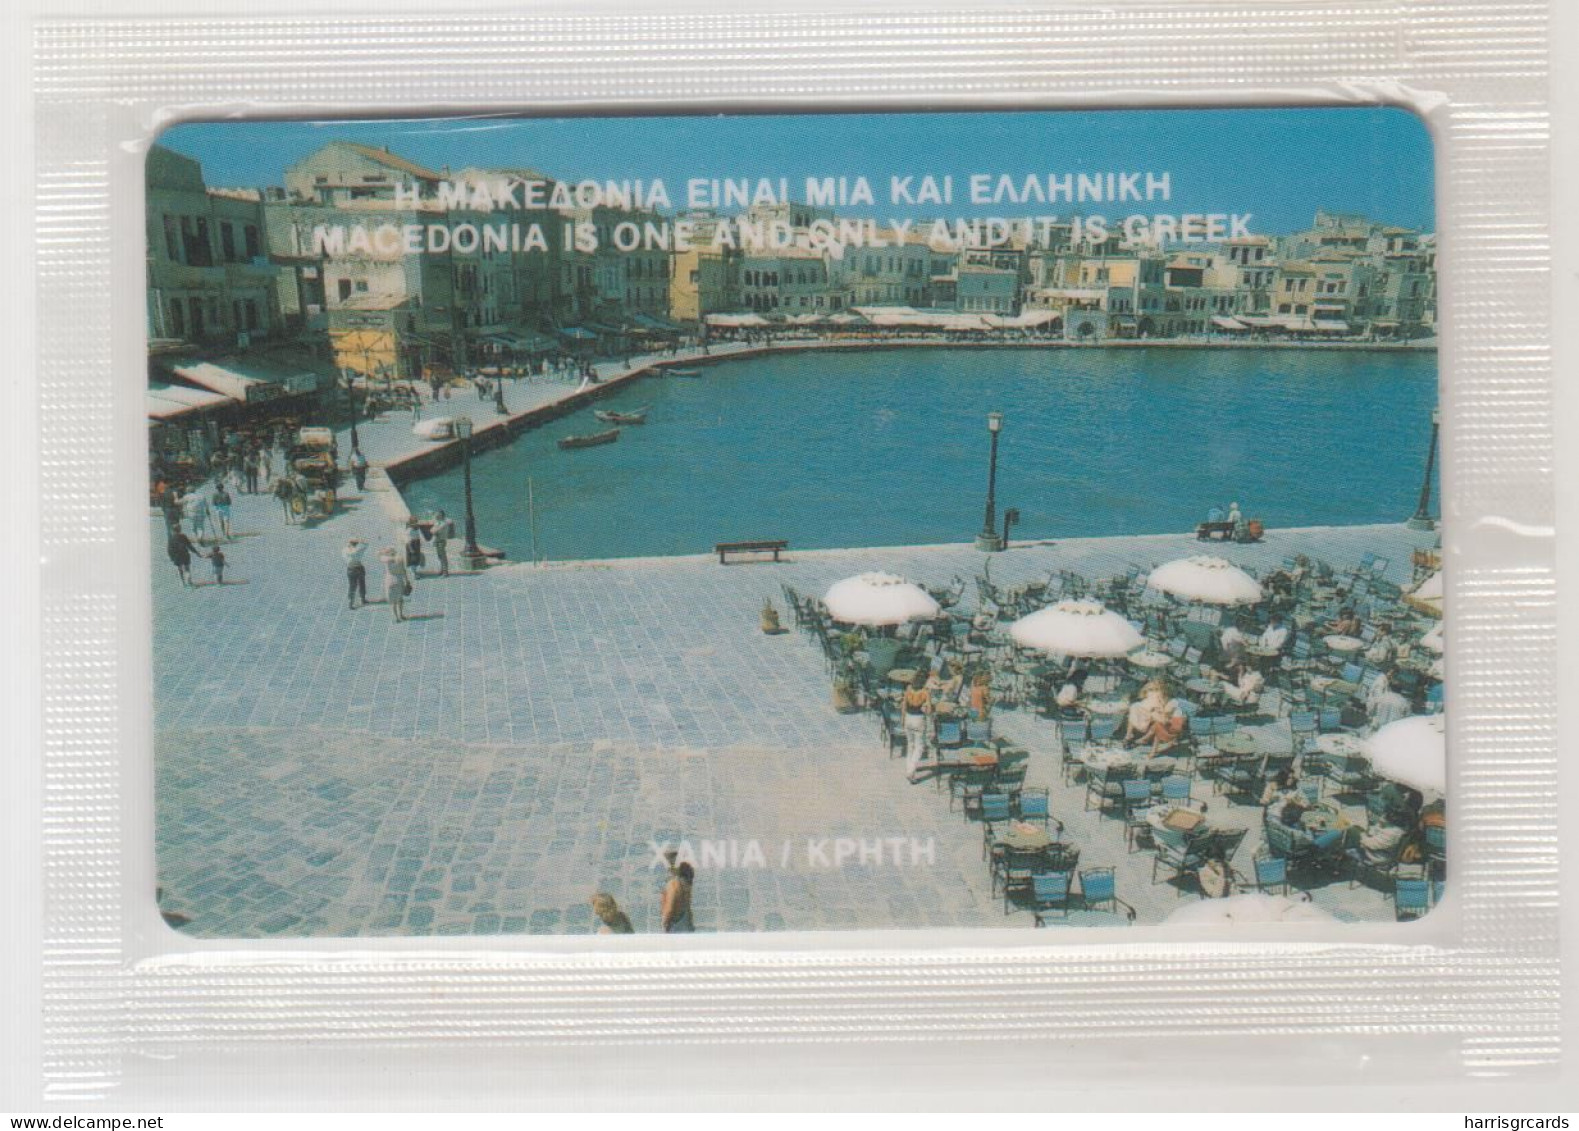 GREECE - The Island Of Crete Arkadi, M010, CN :O5OO Letraset Writing, 08/93, Mint - Griechenland